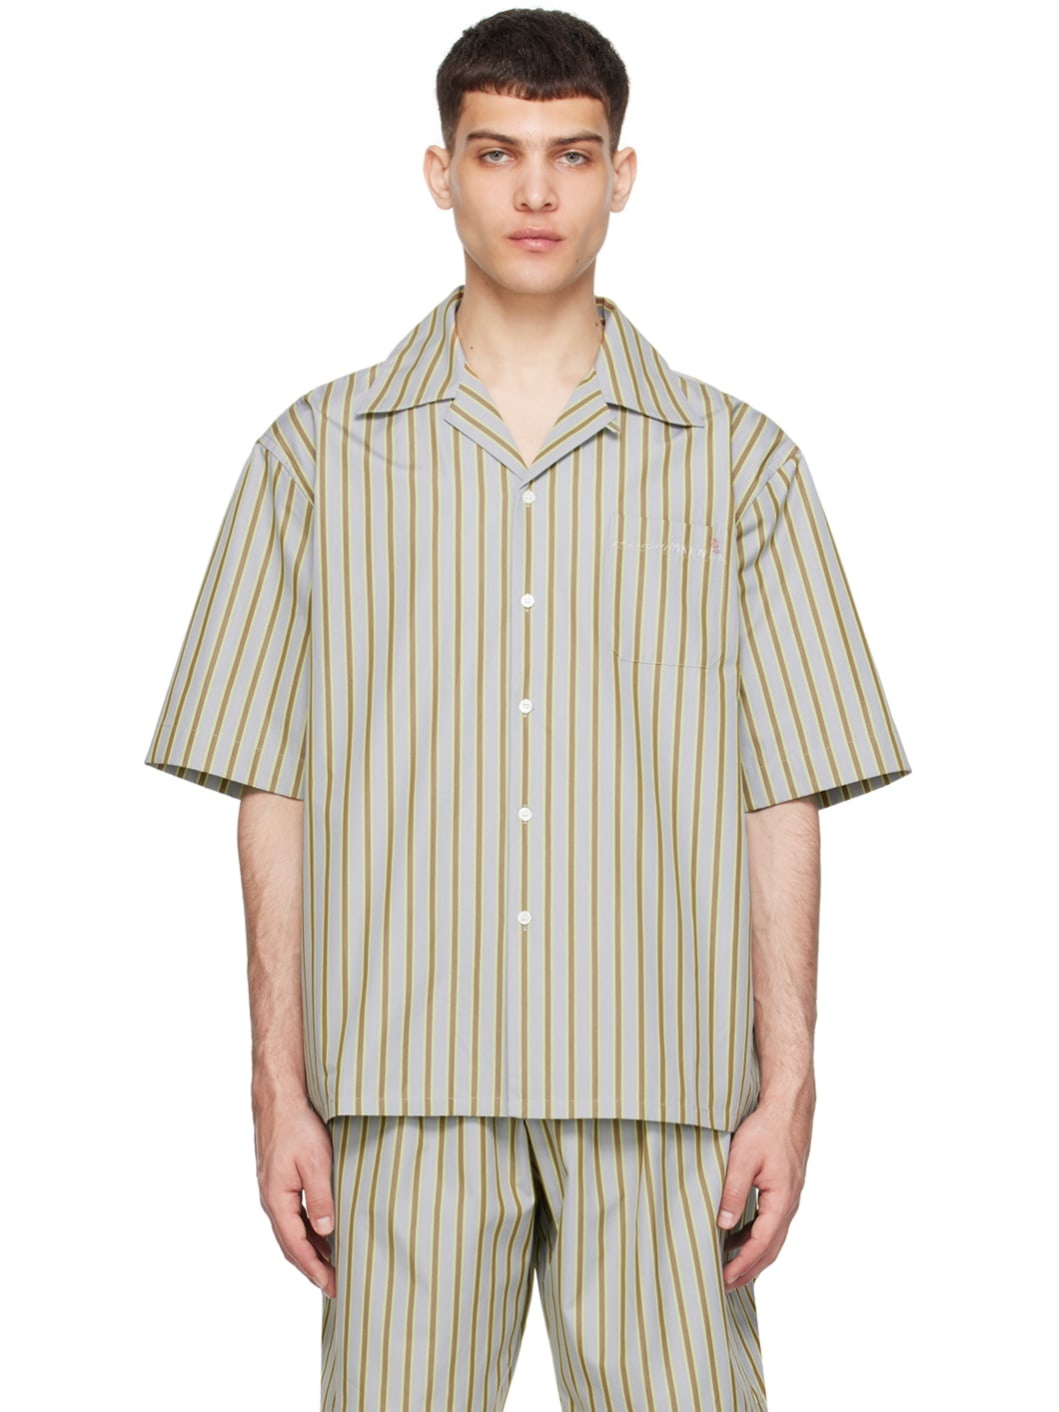 Brown & Gray Striped Shirt - 1